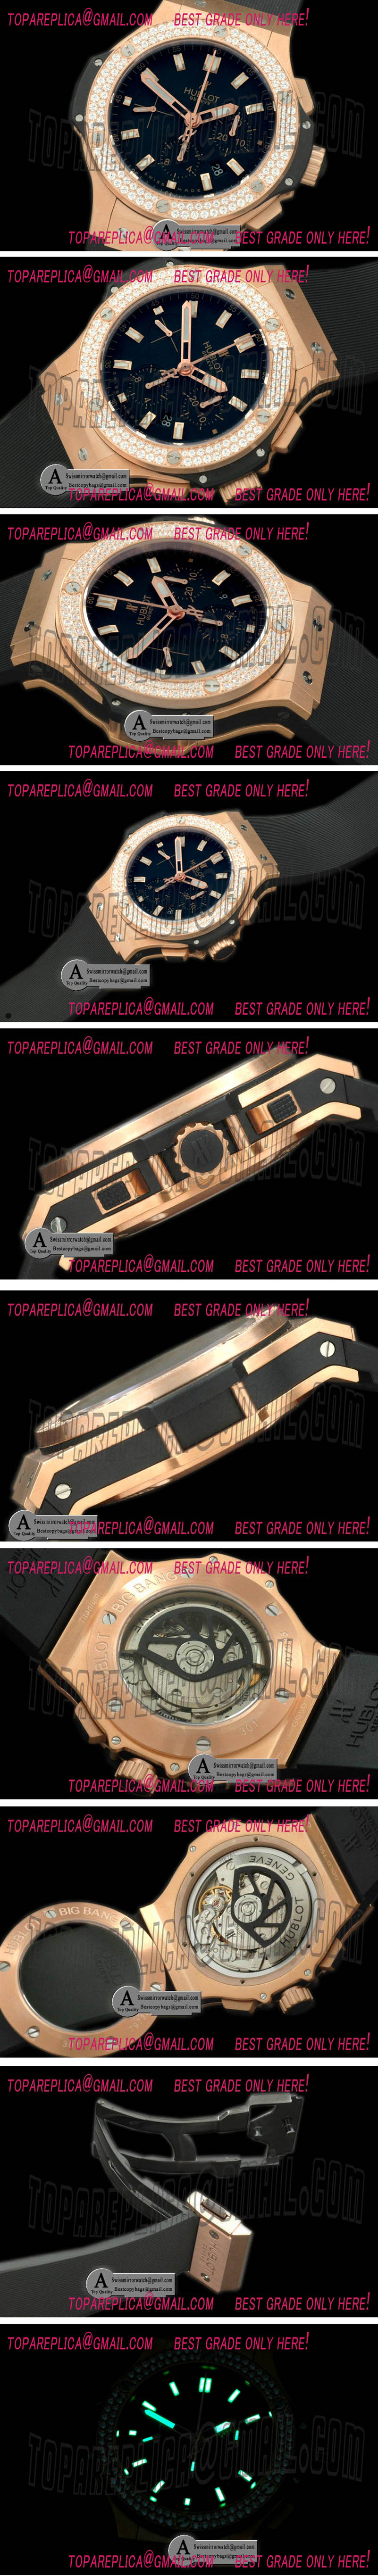 Hublot 301.PX.1180.RX.1104 Big Bang Evolution Rose Gold/Diamond/Leather Black A-7750 28800 Replica Watches